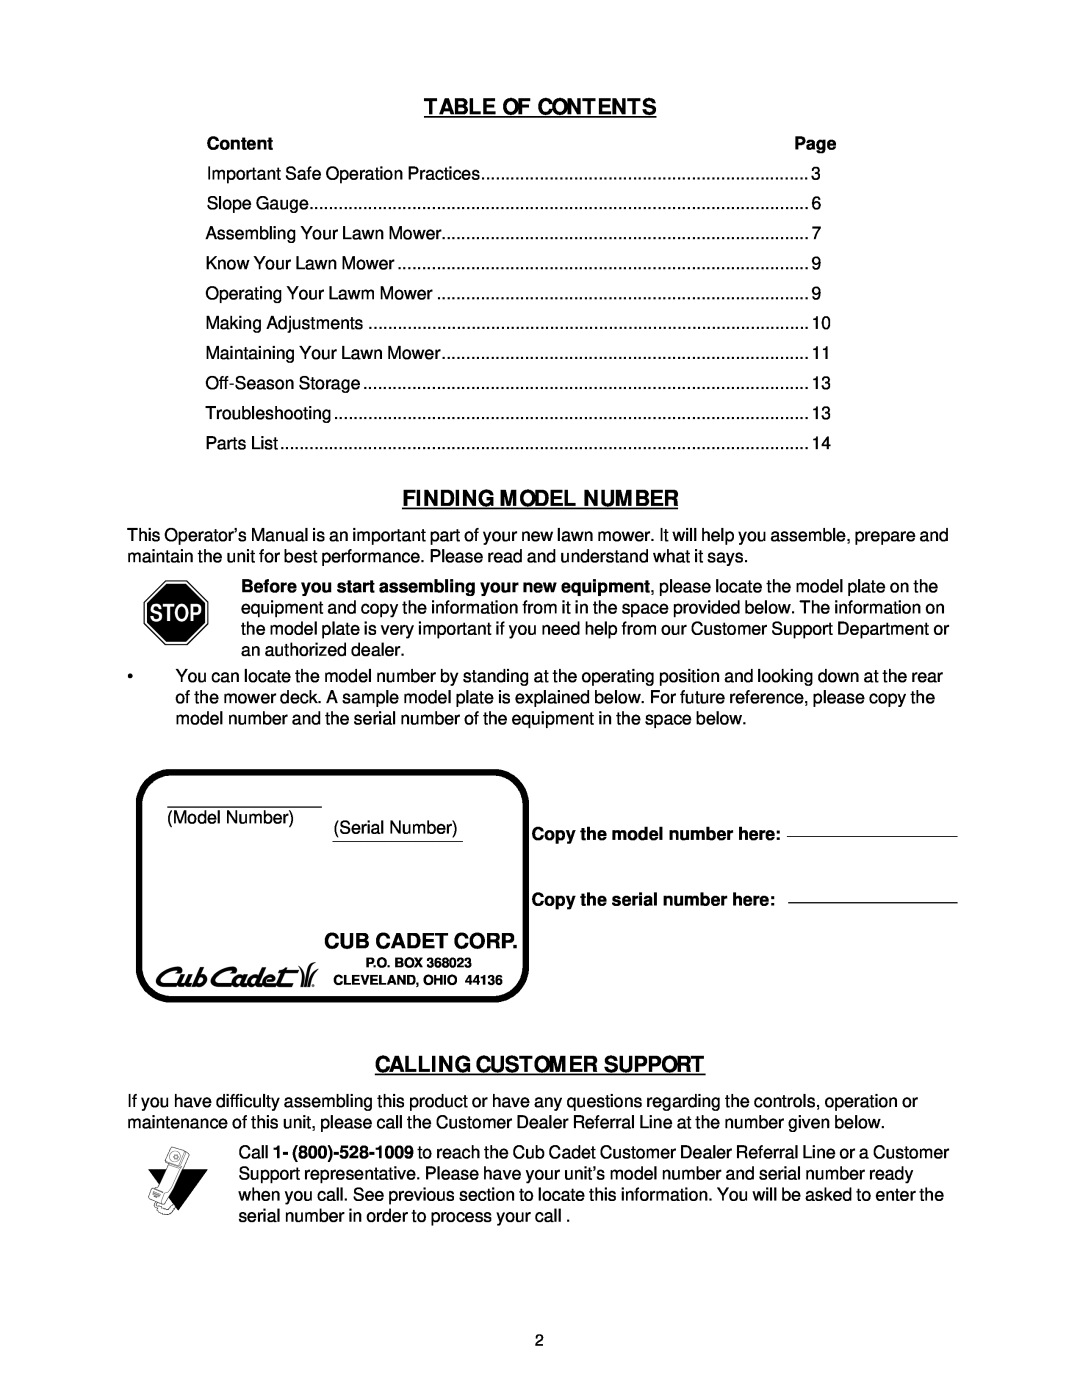 Cub Cadet PR-521 manual Table Of Contents, Finding Model Number, Calling Customer Support, Cub Cadet Corp 